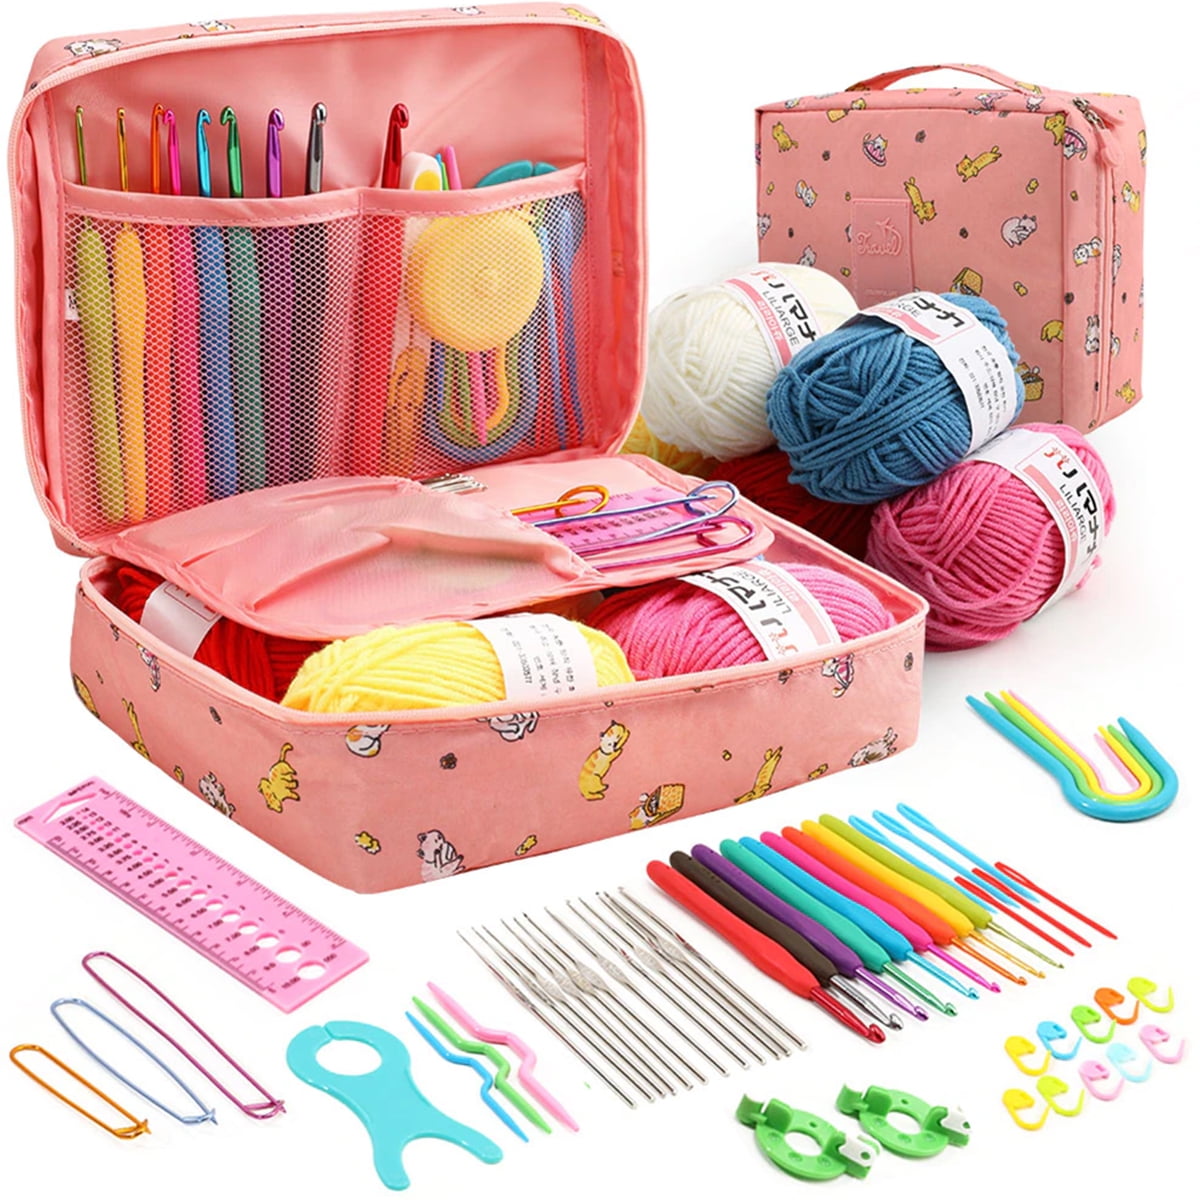  Aeelike Crochet Kit with Yarn, Beginners Crochet Kit for Adult  Kids Include Rubber Soft Grip Crochet Hooks,Knitting Supplies DIY Tools for  Crochet Lover,Starter Kit with Portable Storage Bag Pink